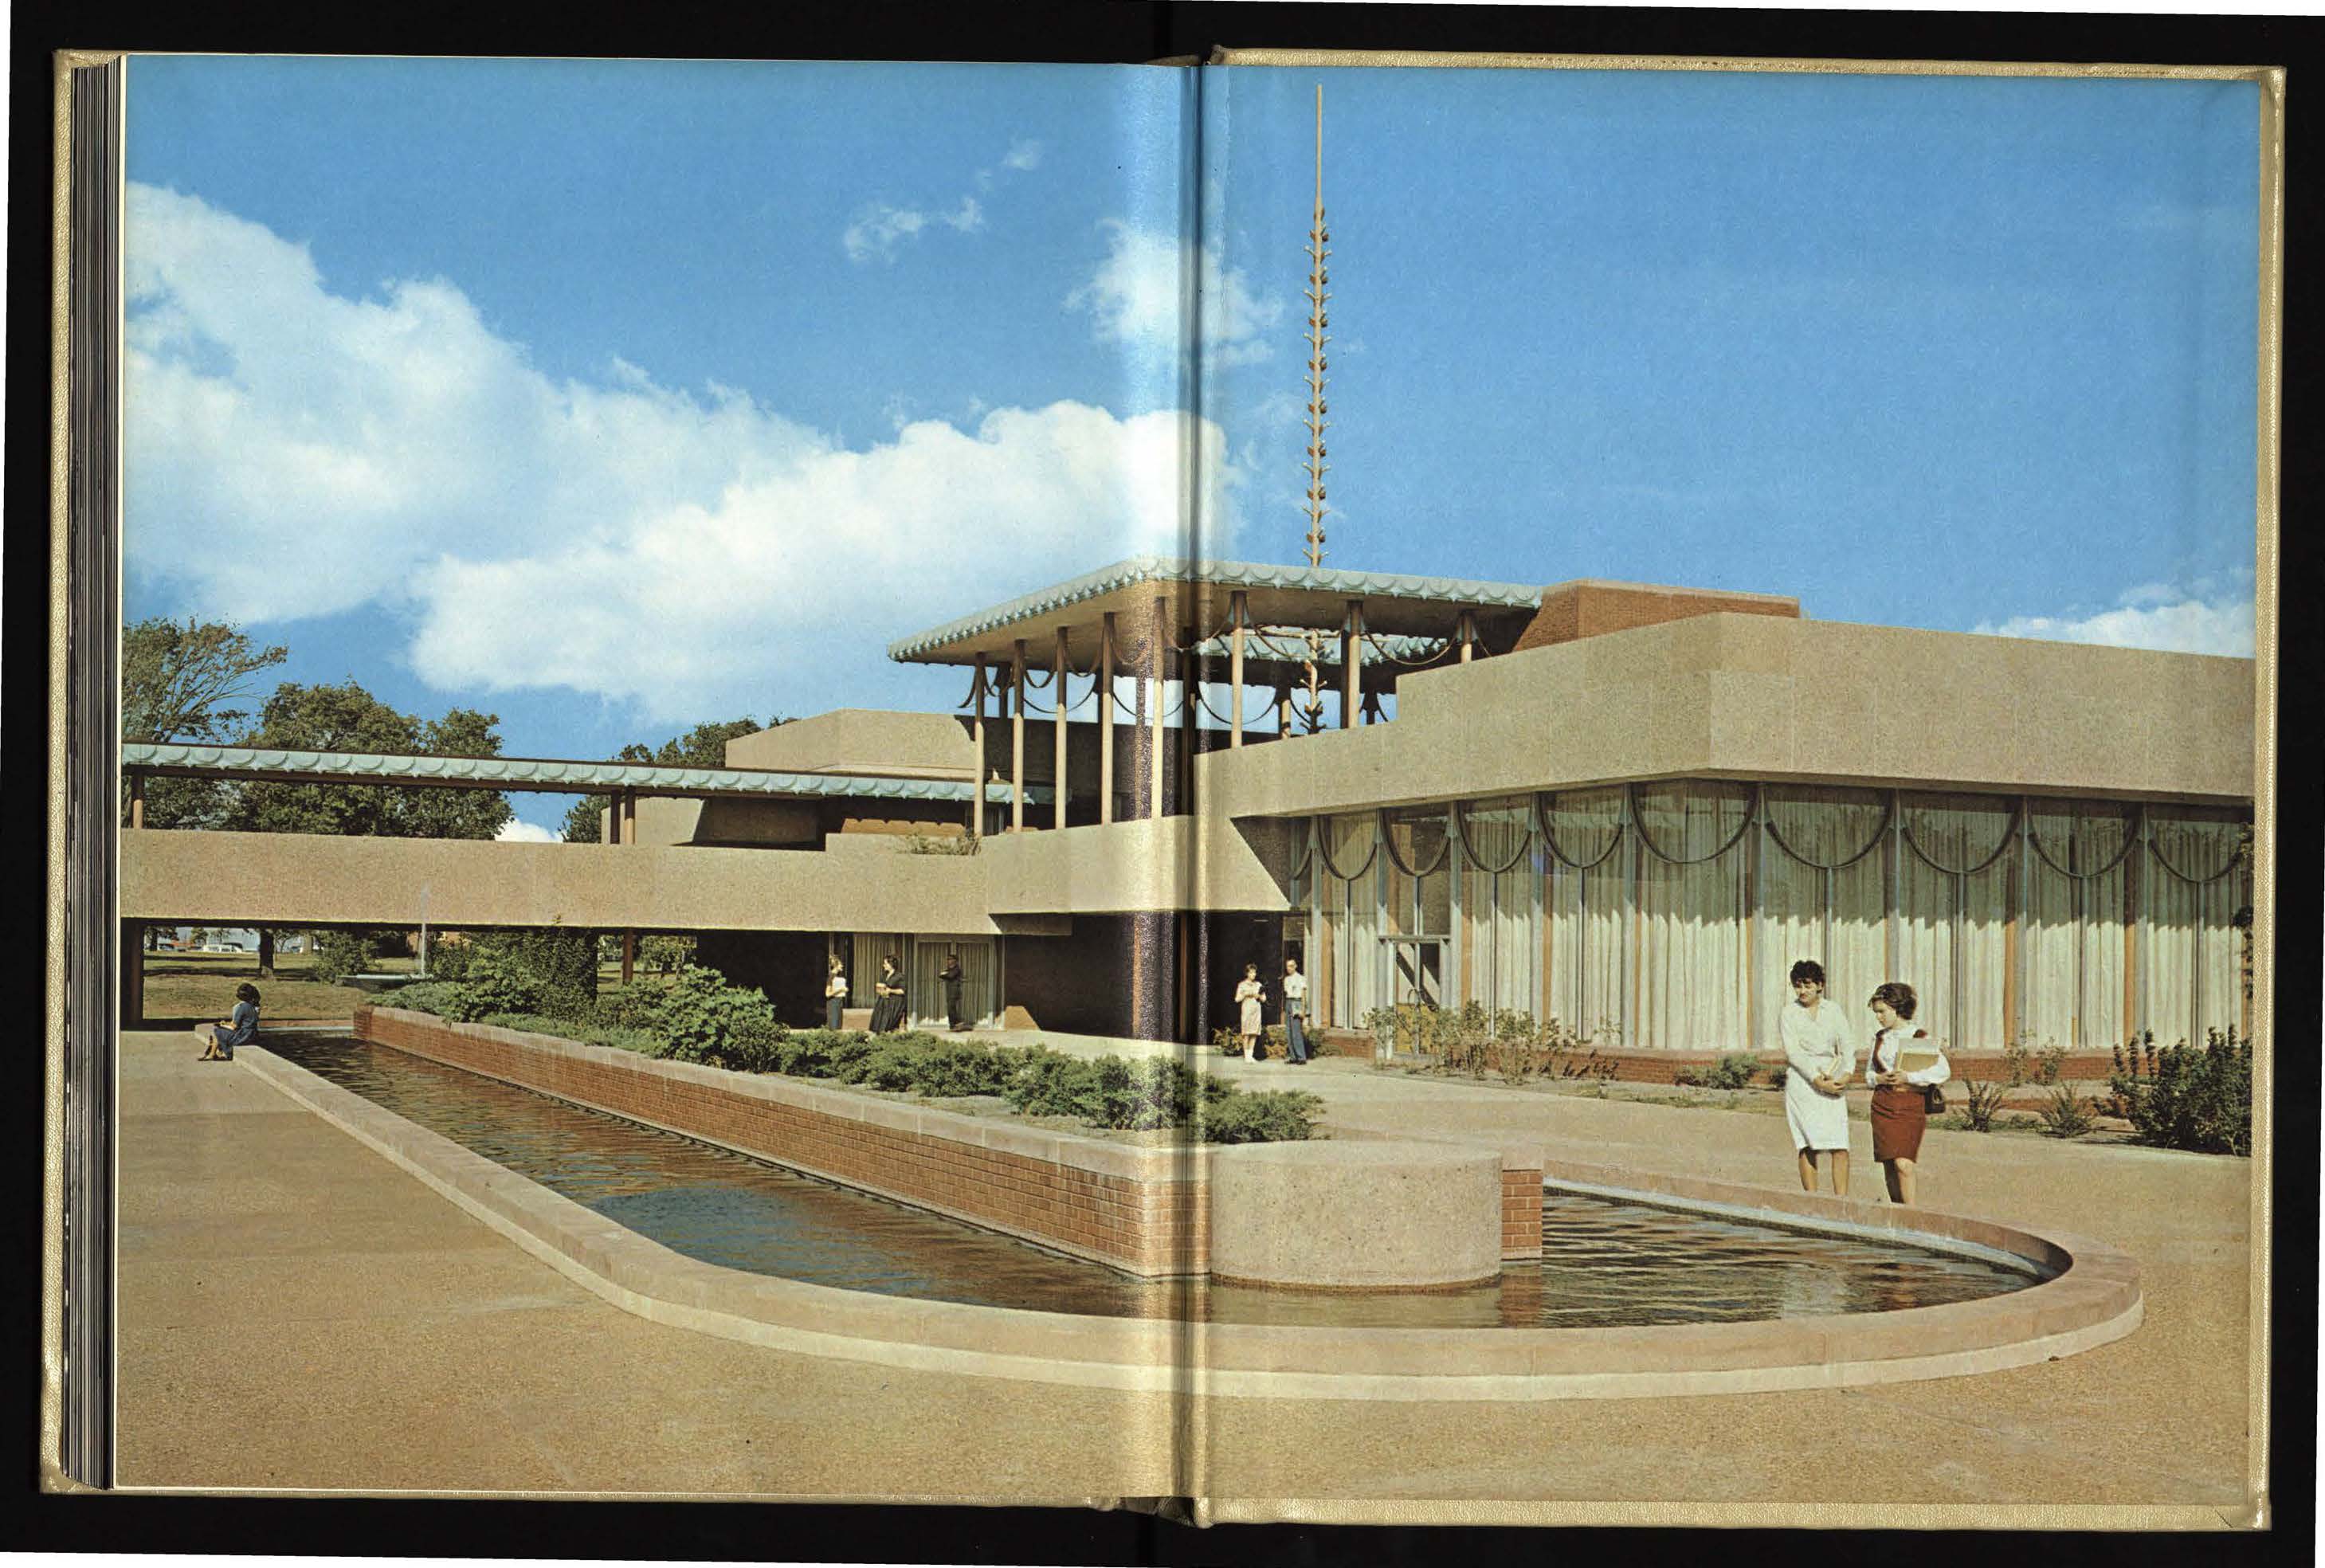 Corbin Education Center in 1965